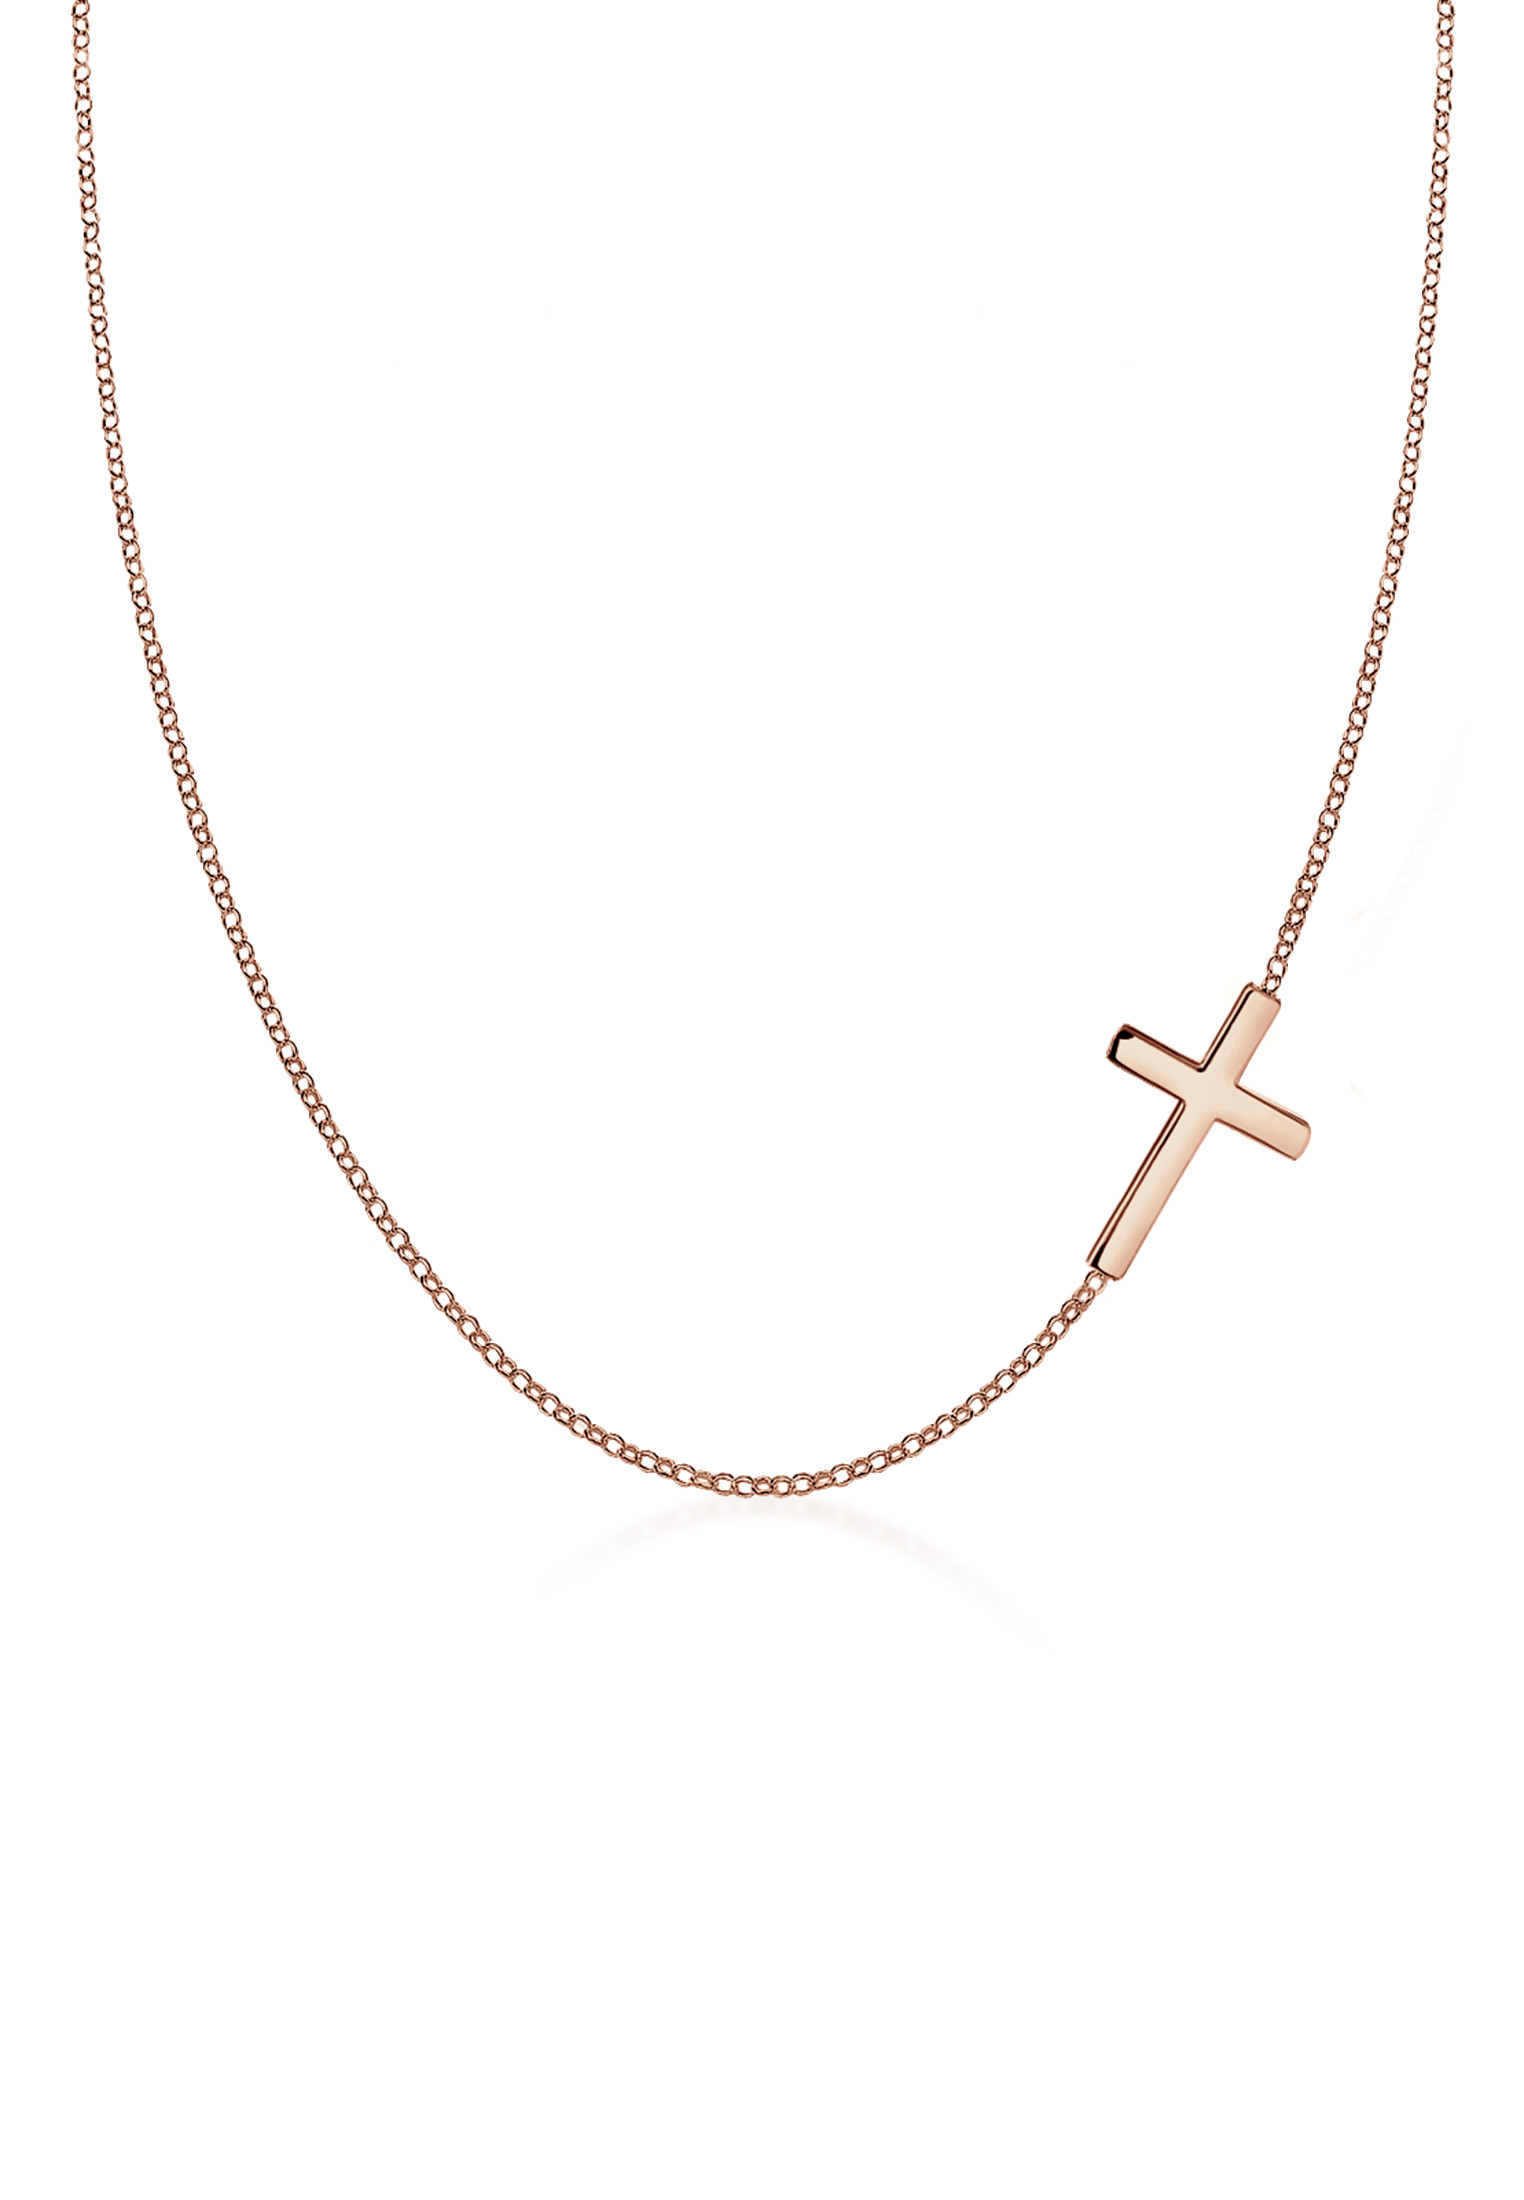 Halskette Kreuz Basic | 925 Sterling Silber vergoldet